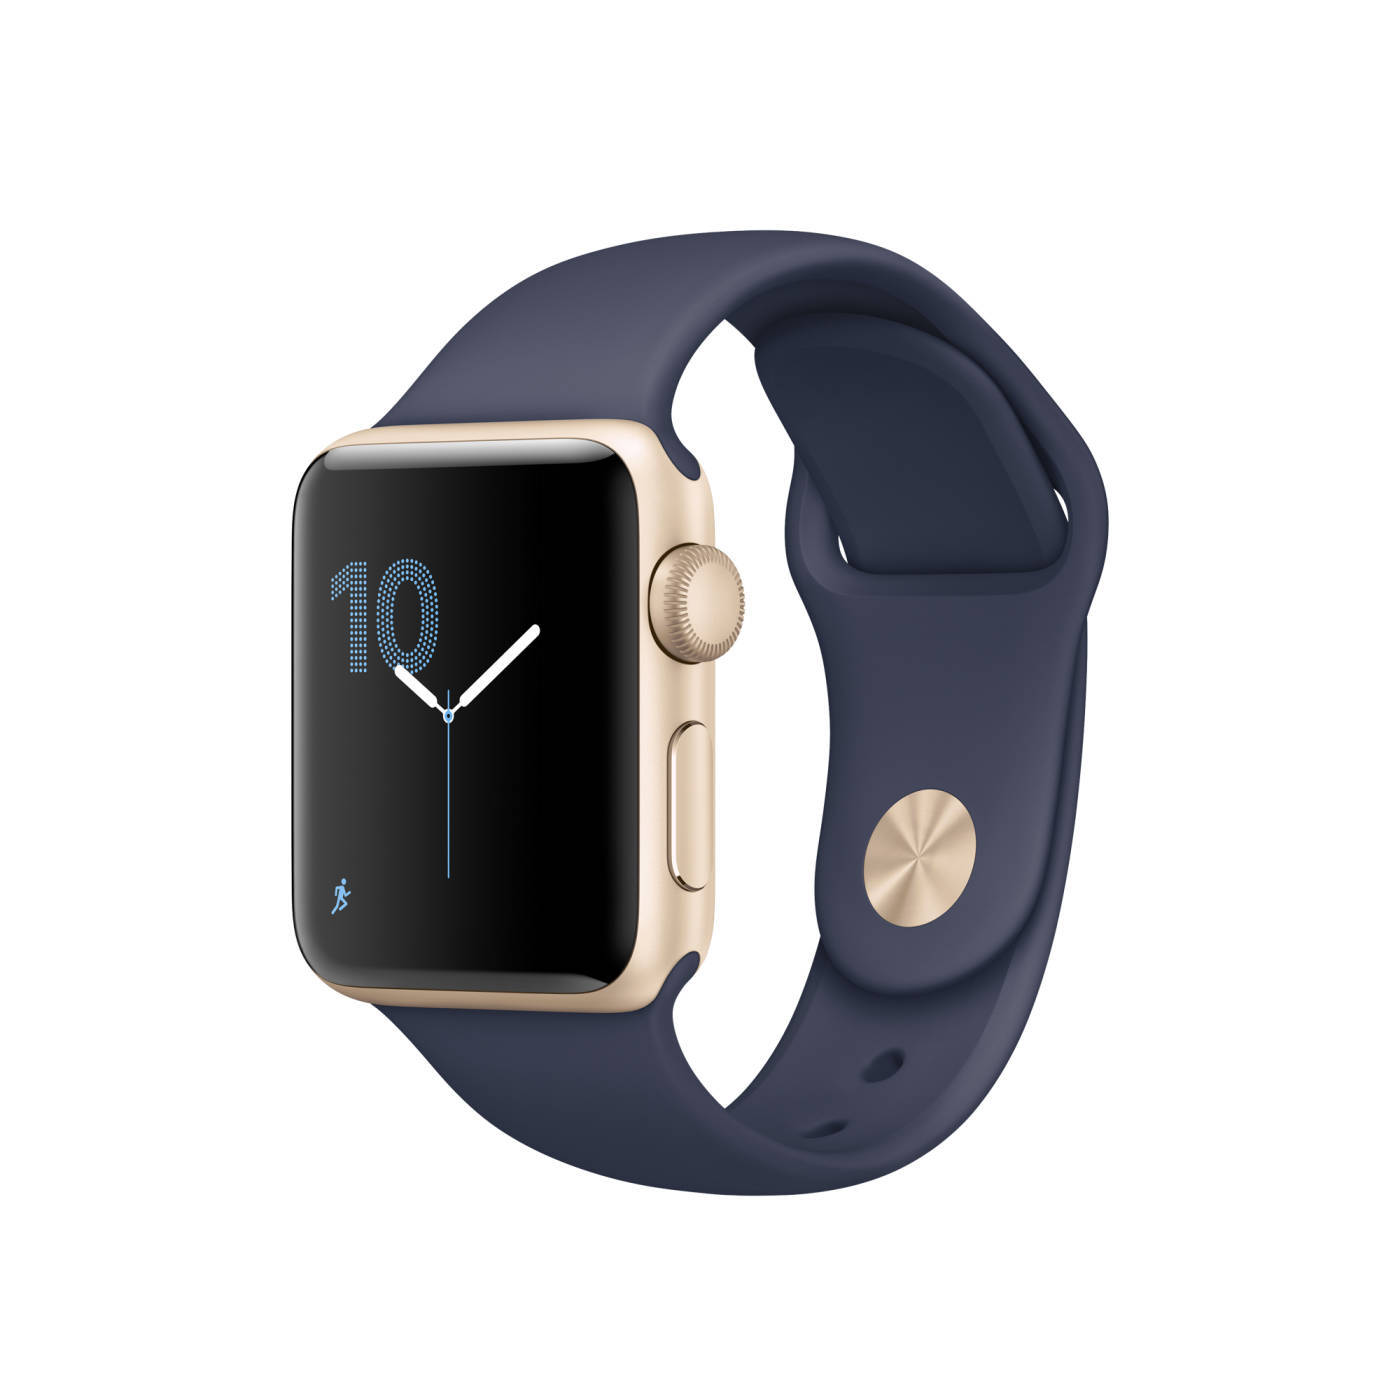 Apple Watch Series 2 - Design